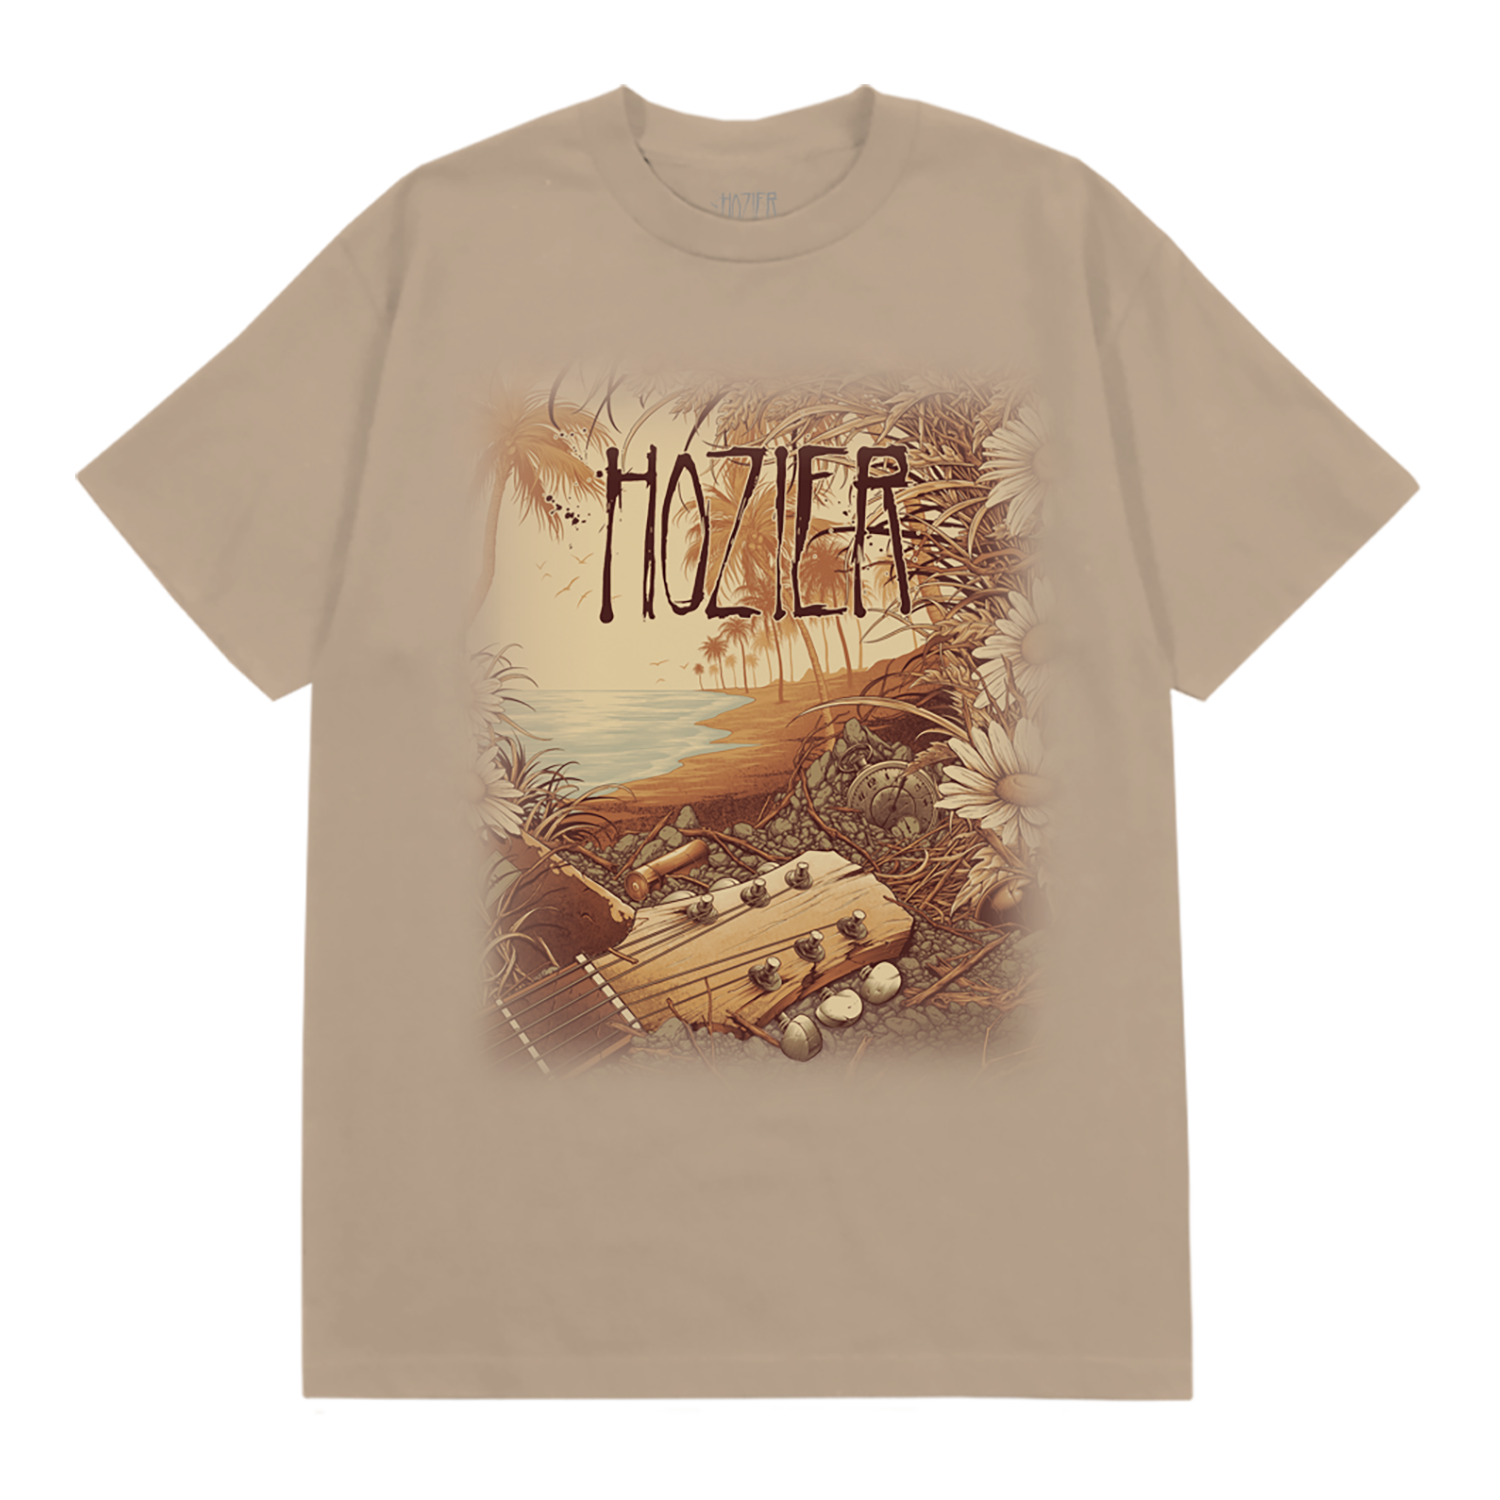 Hozier - Madrid Event T-Shirt